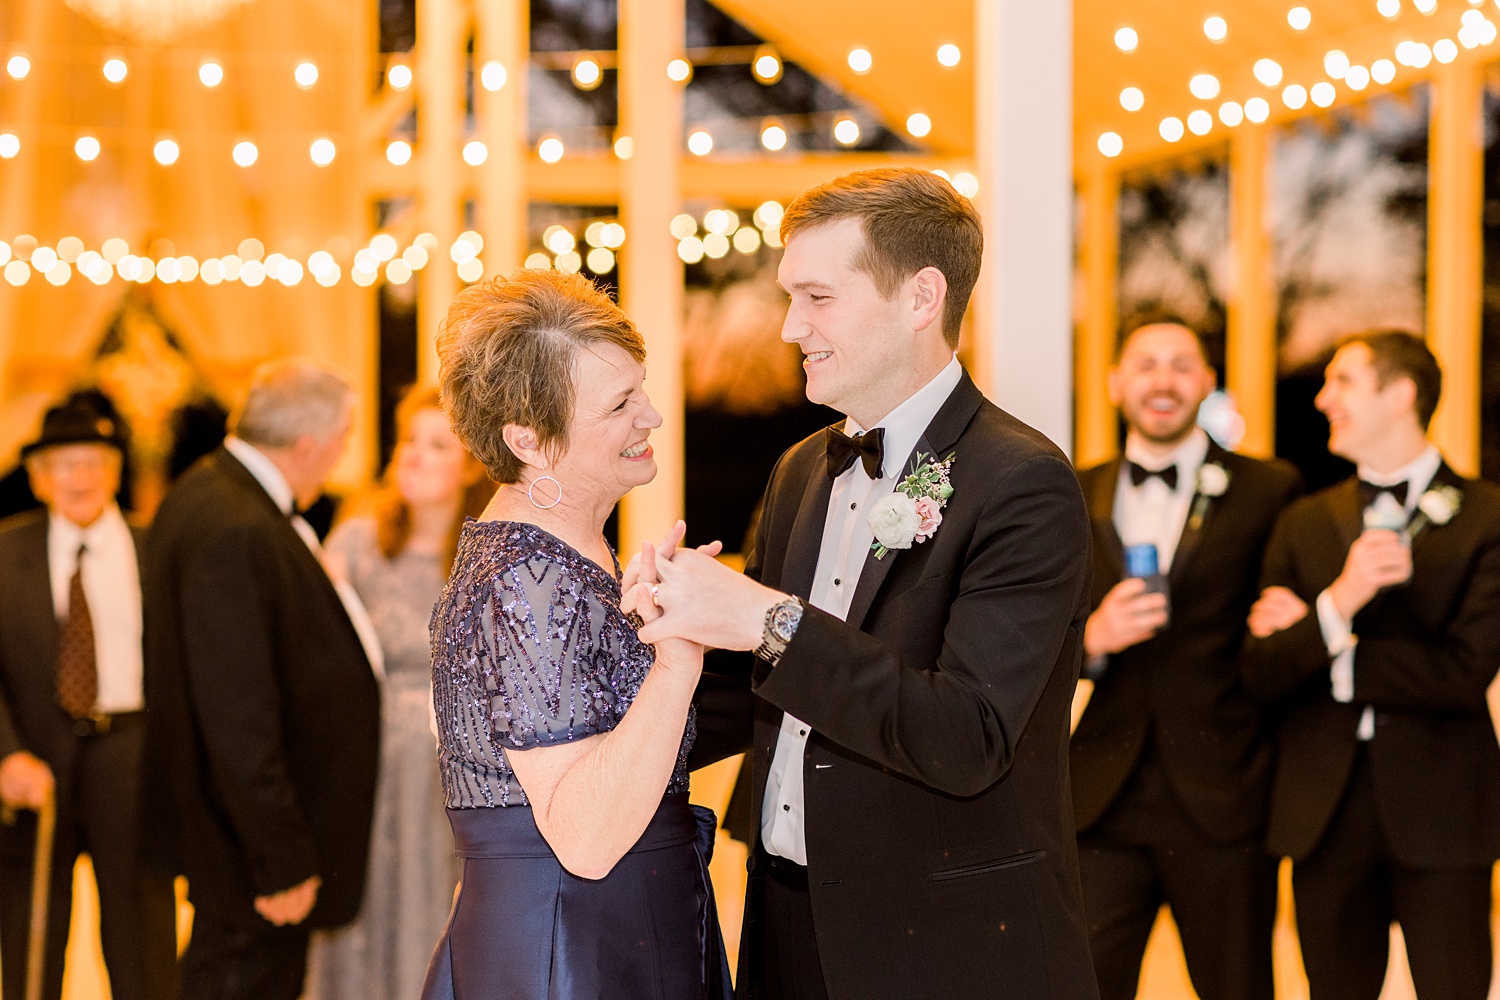 mother-son dance during Alabama wedding reception